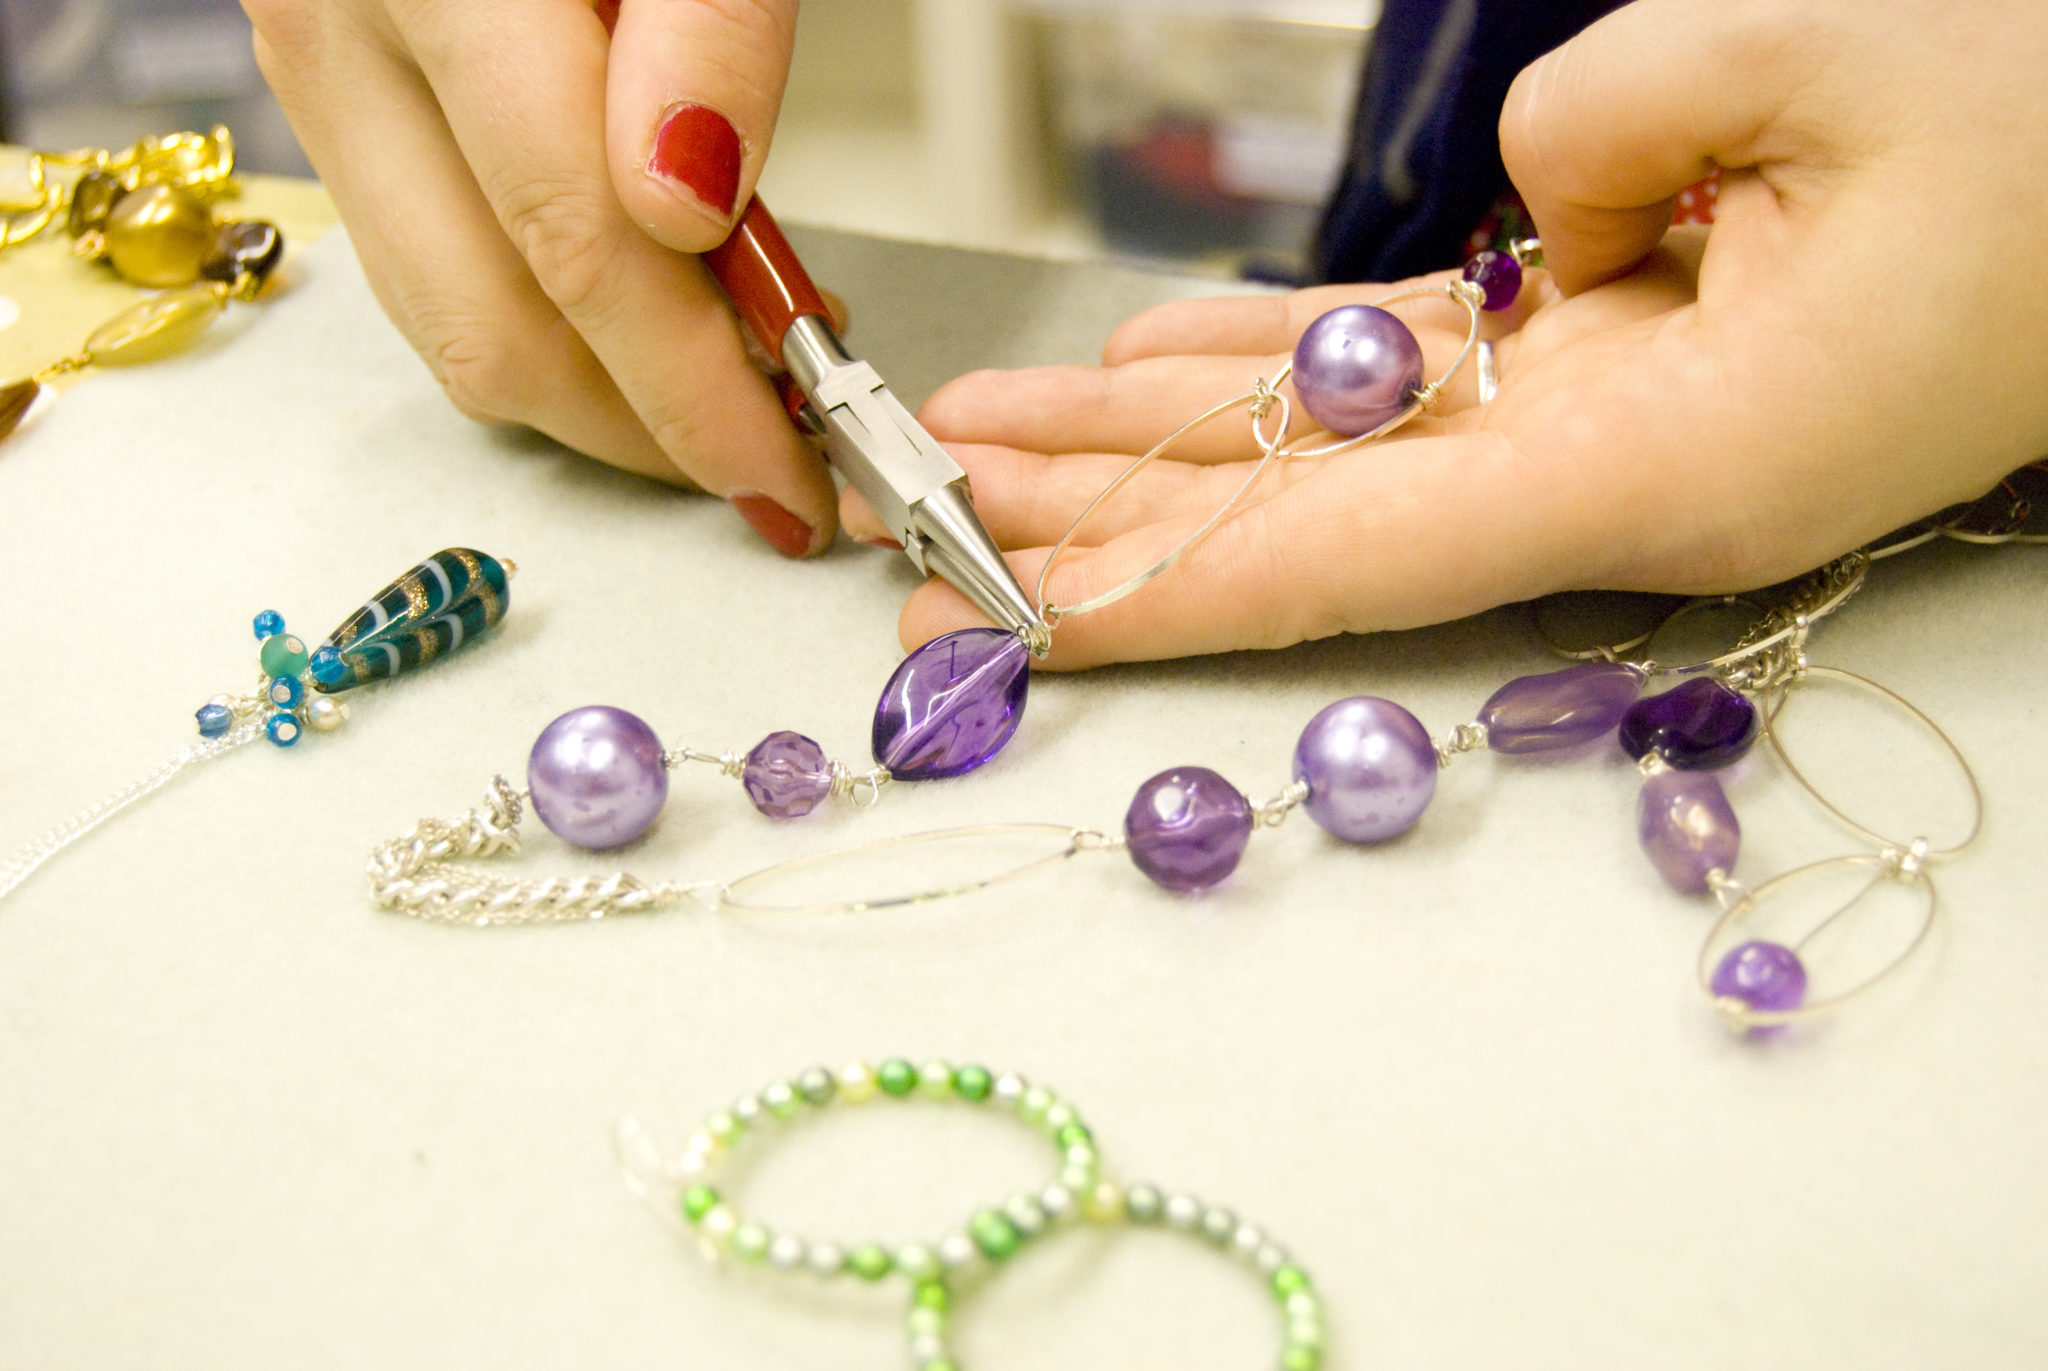 Homemade jewellery making ideas